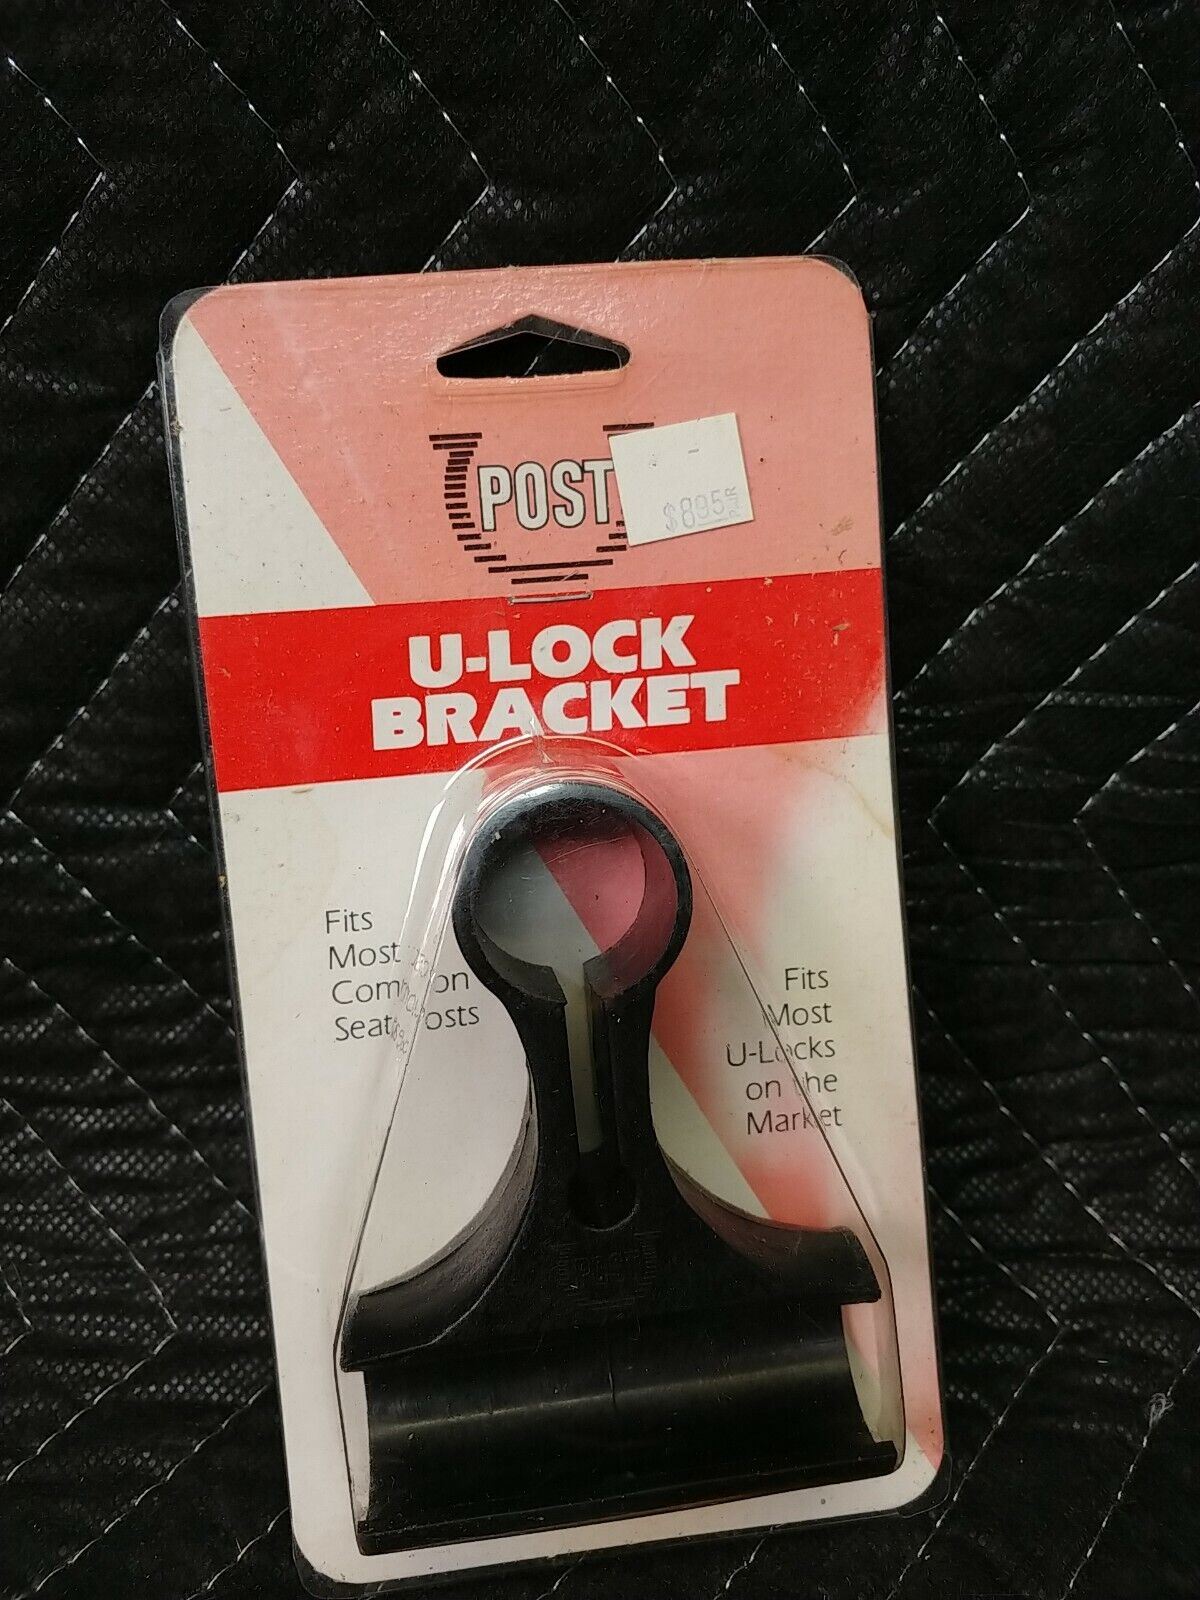 Post U-Lock Bracket for bike lock